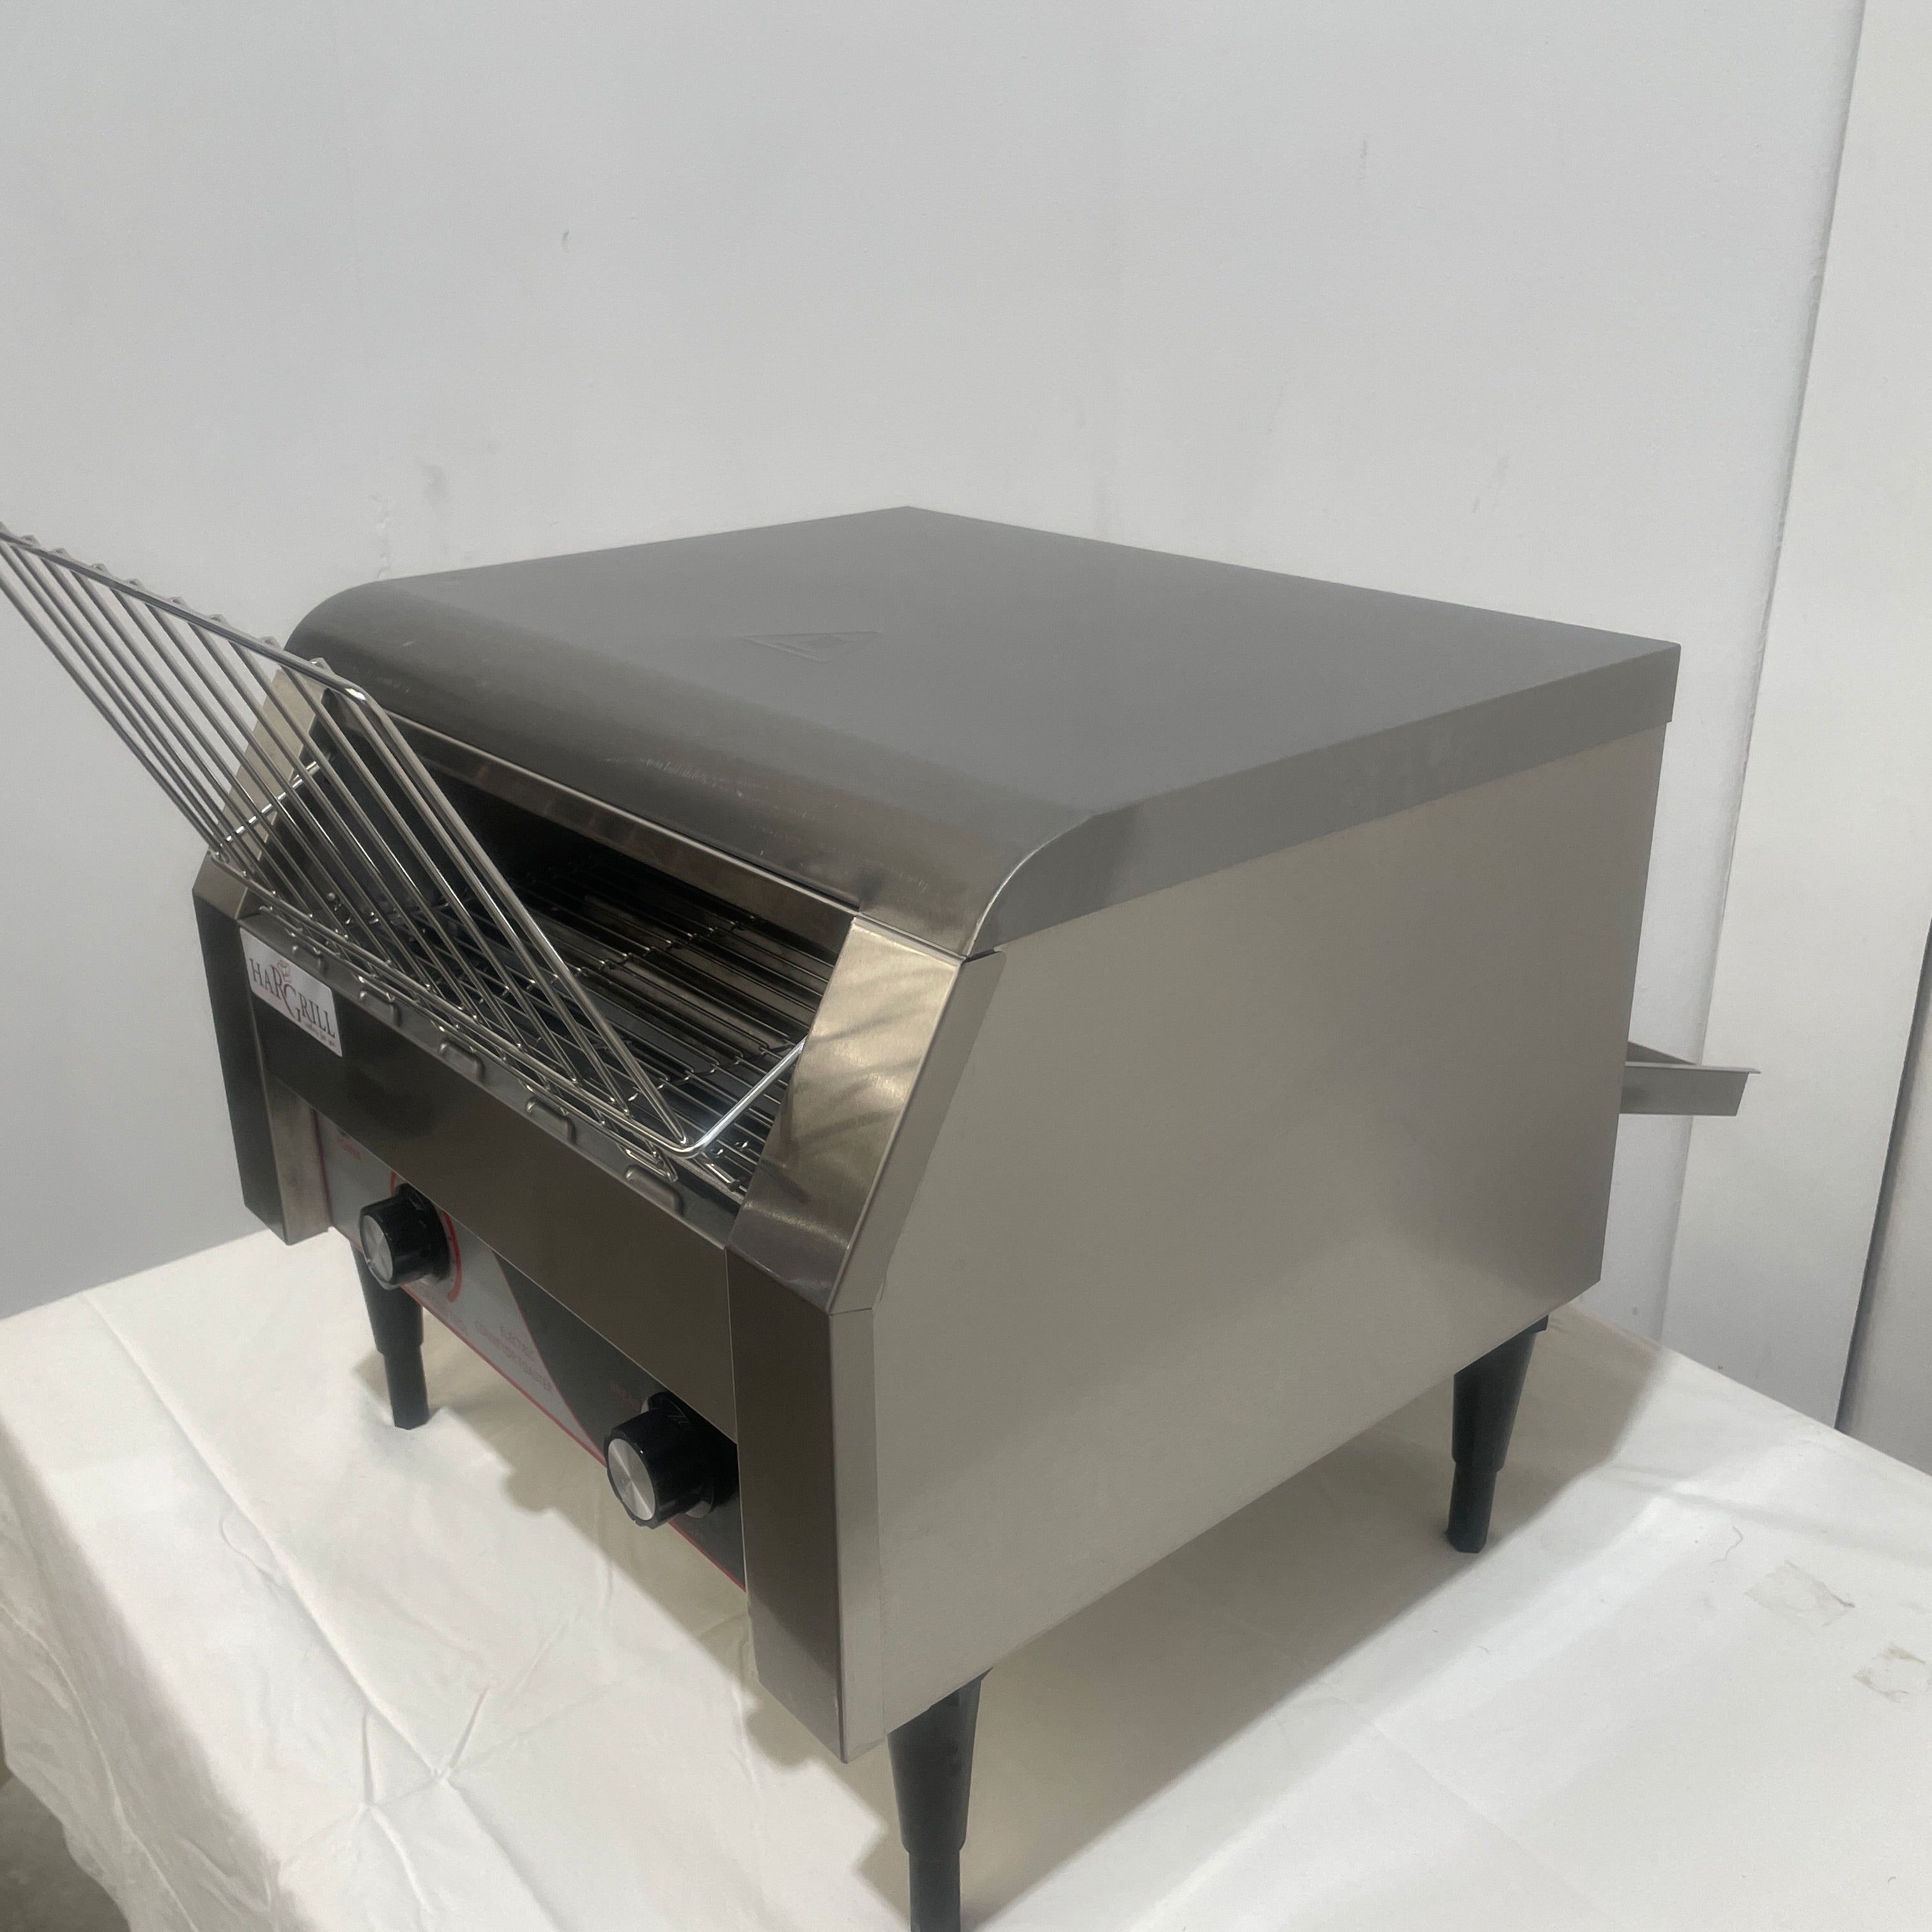 Thumbnail - Hargrill HAR-450 Conveyor Toaster